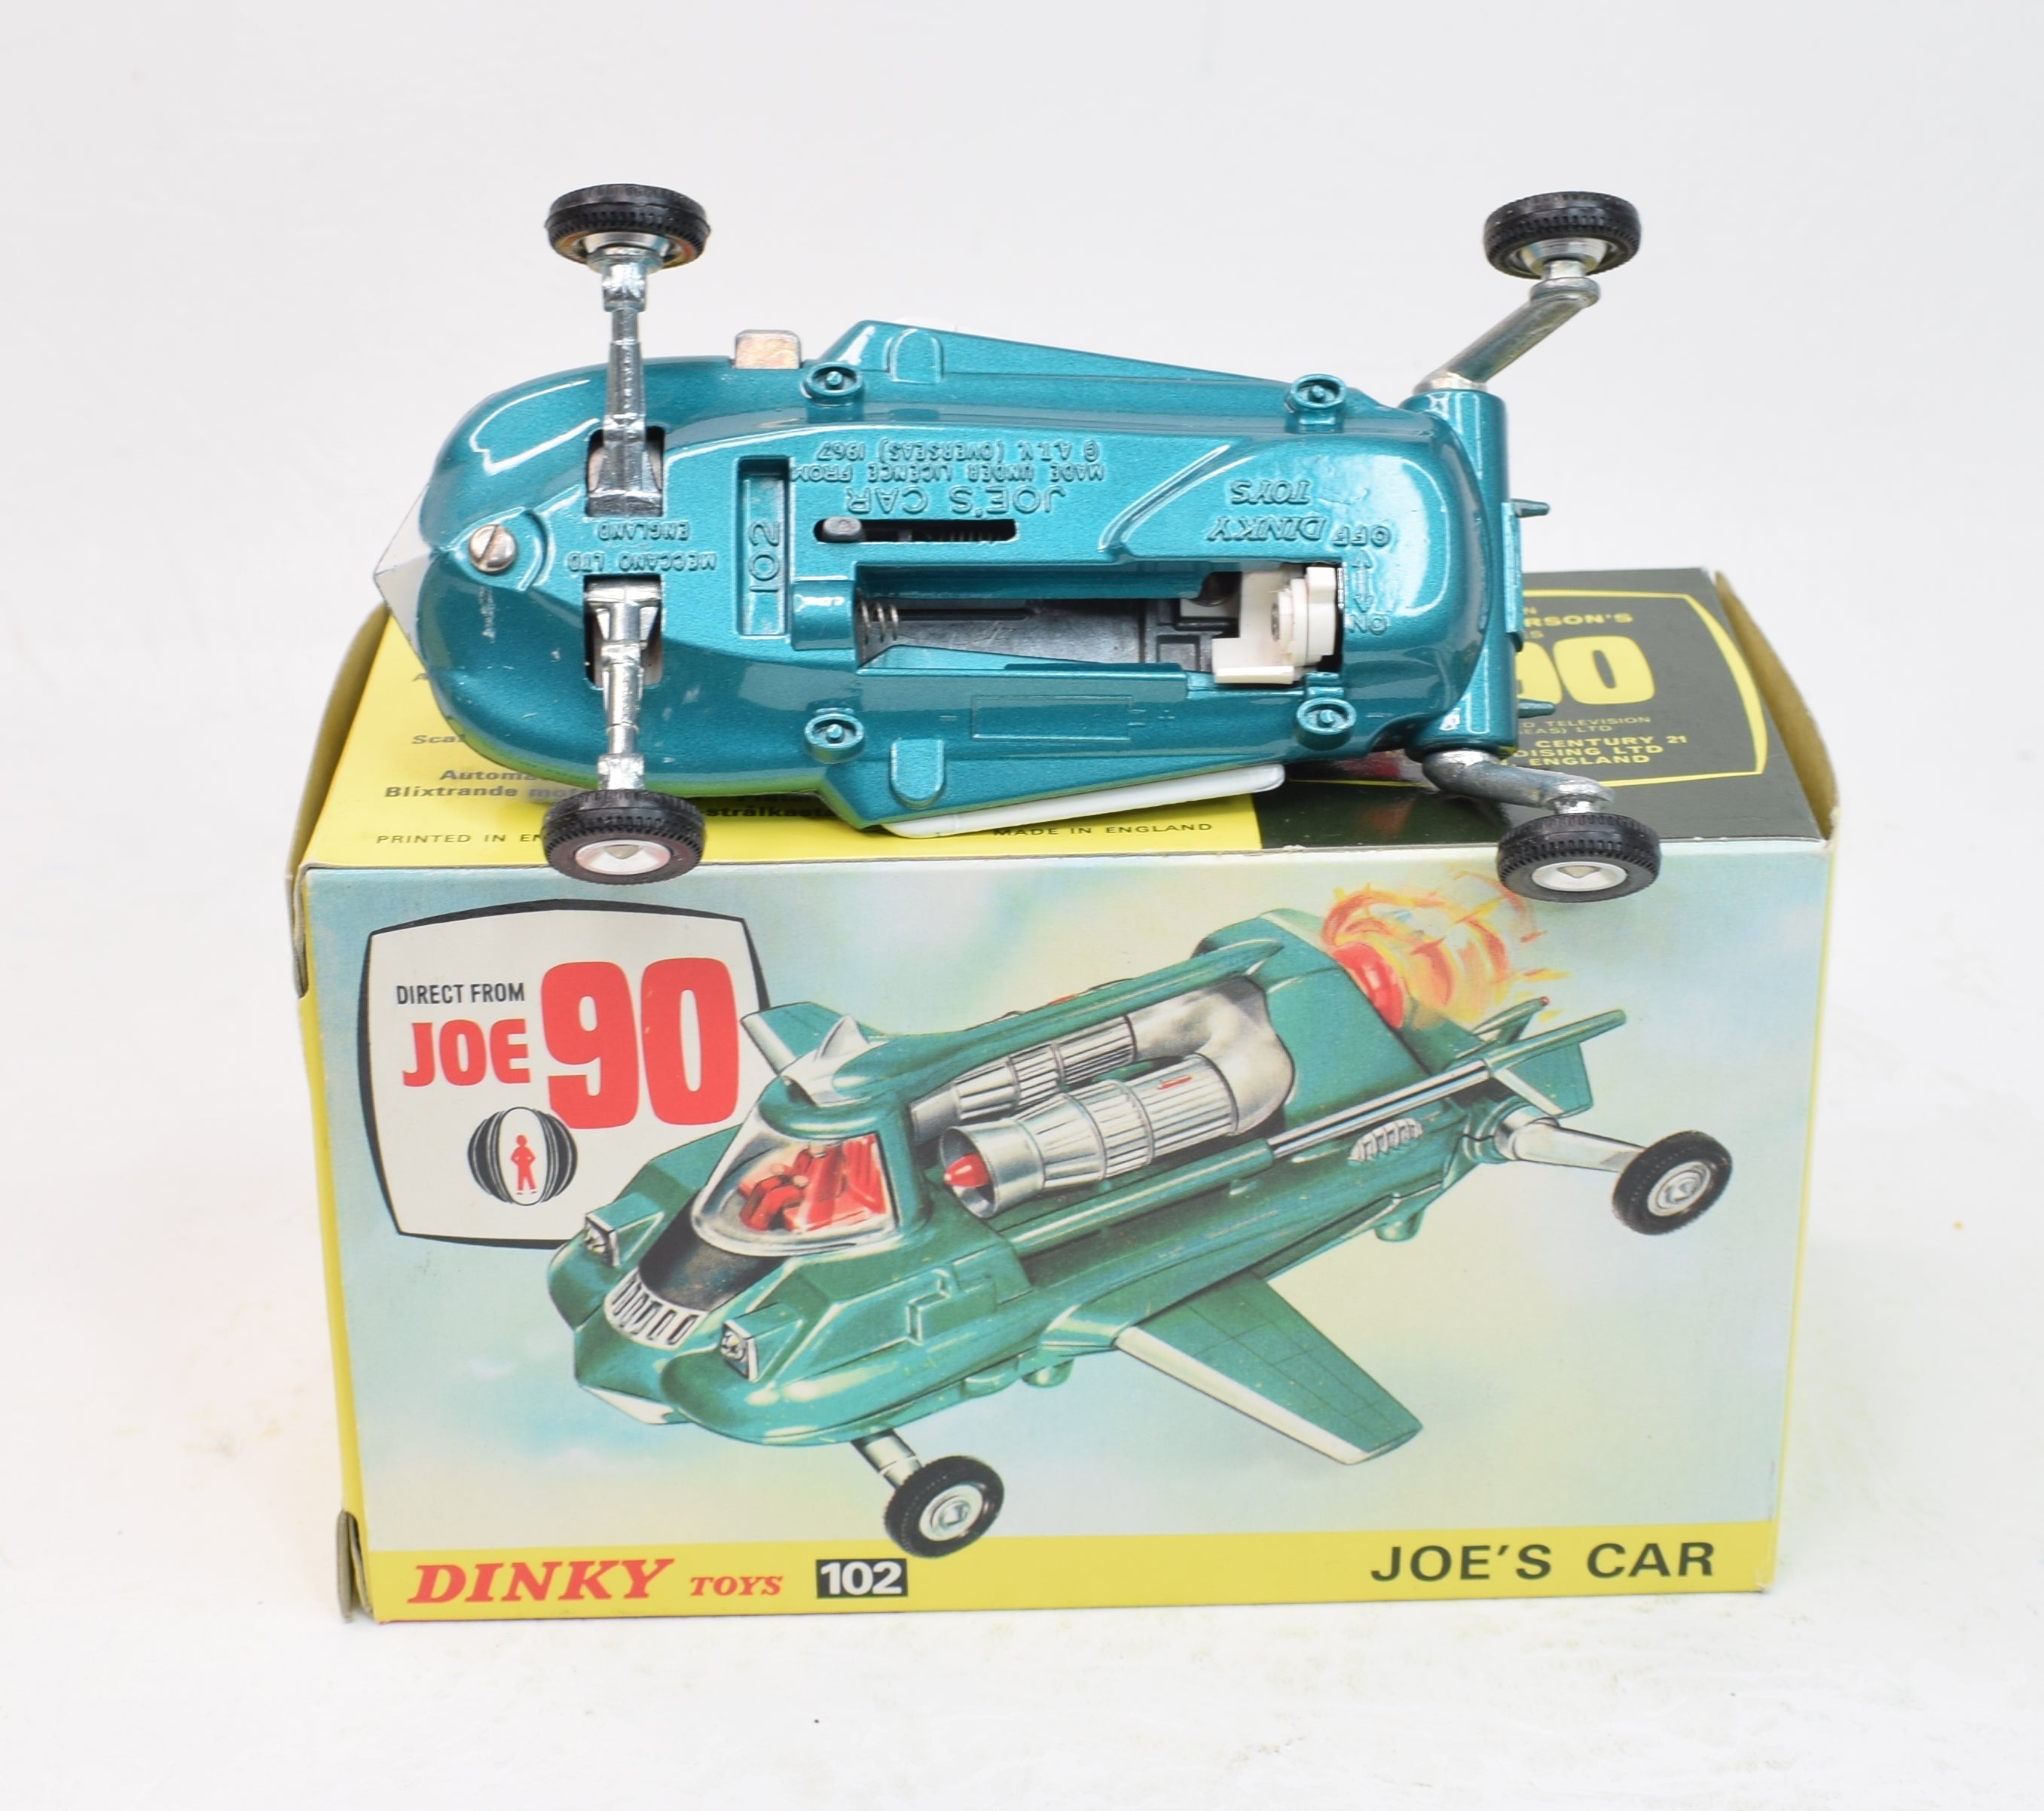 Dinky toy 102 Joe's Car (Old shop stock) – JK DIE-CAST MODELS